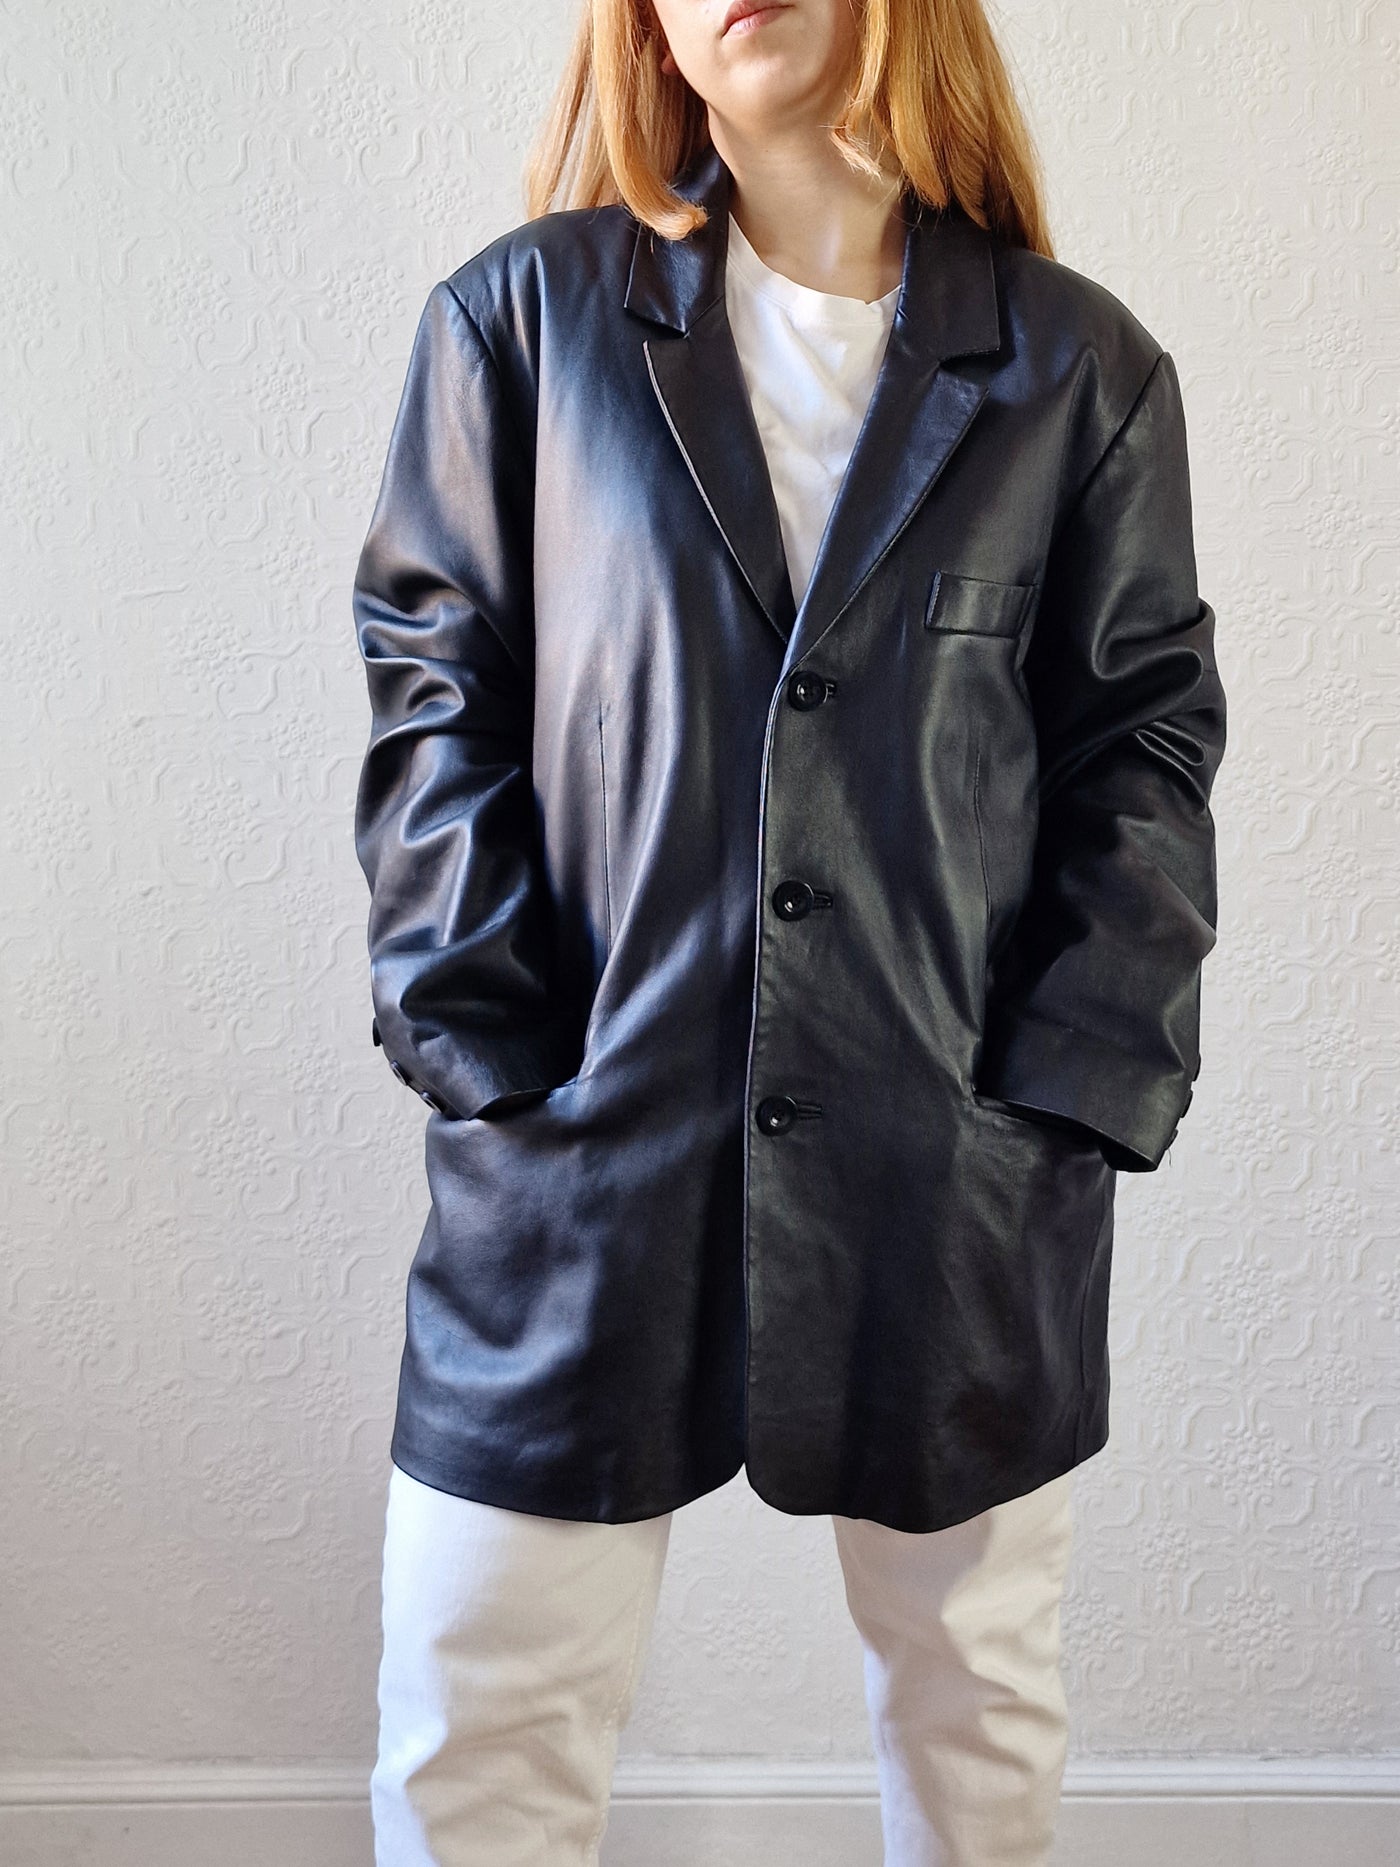 Vintage Black 100% Genuine Leather Blazer Style Jacket - L